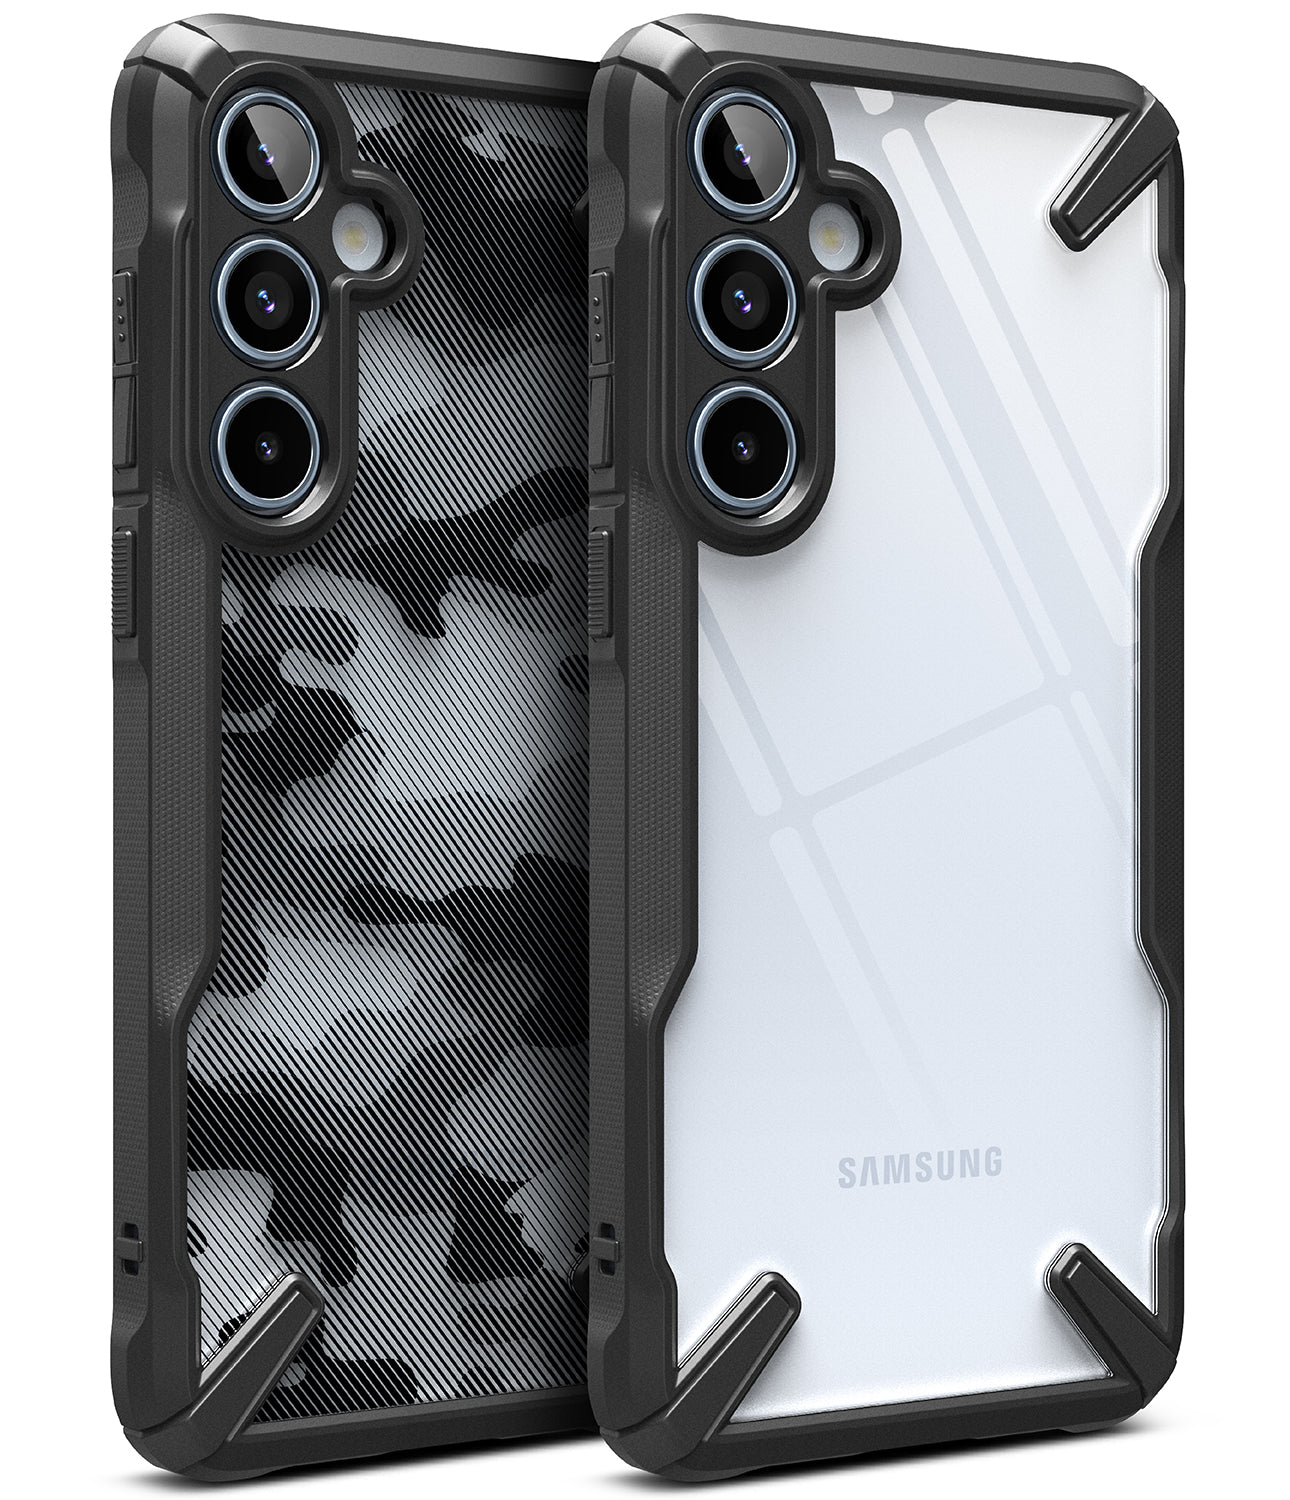 Galaxy A55 Case | Fusion-X